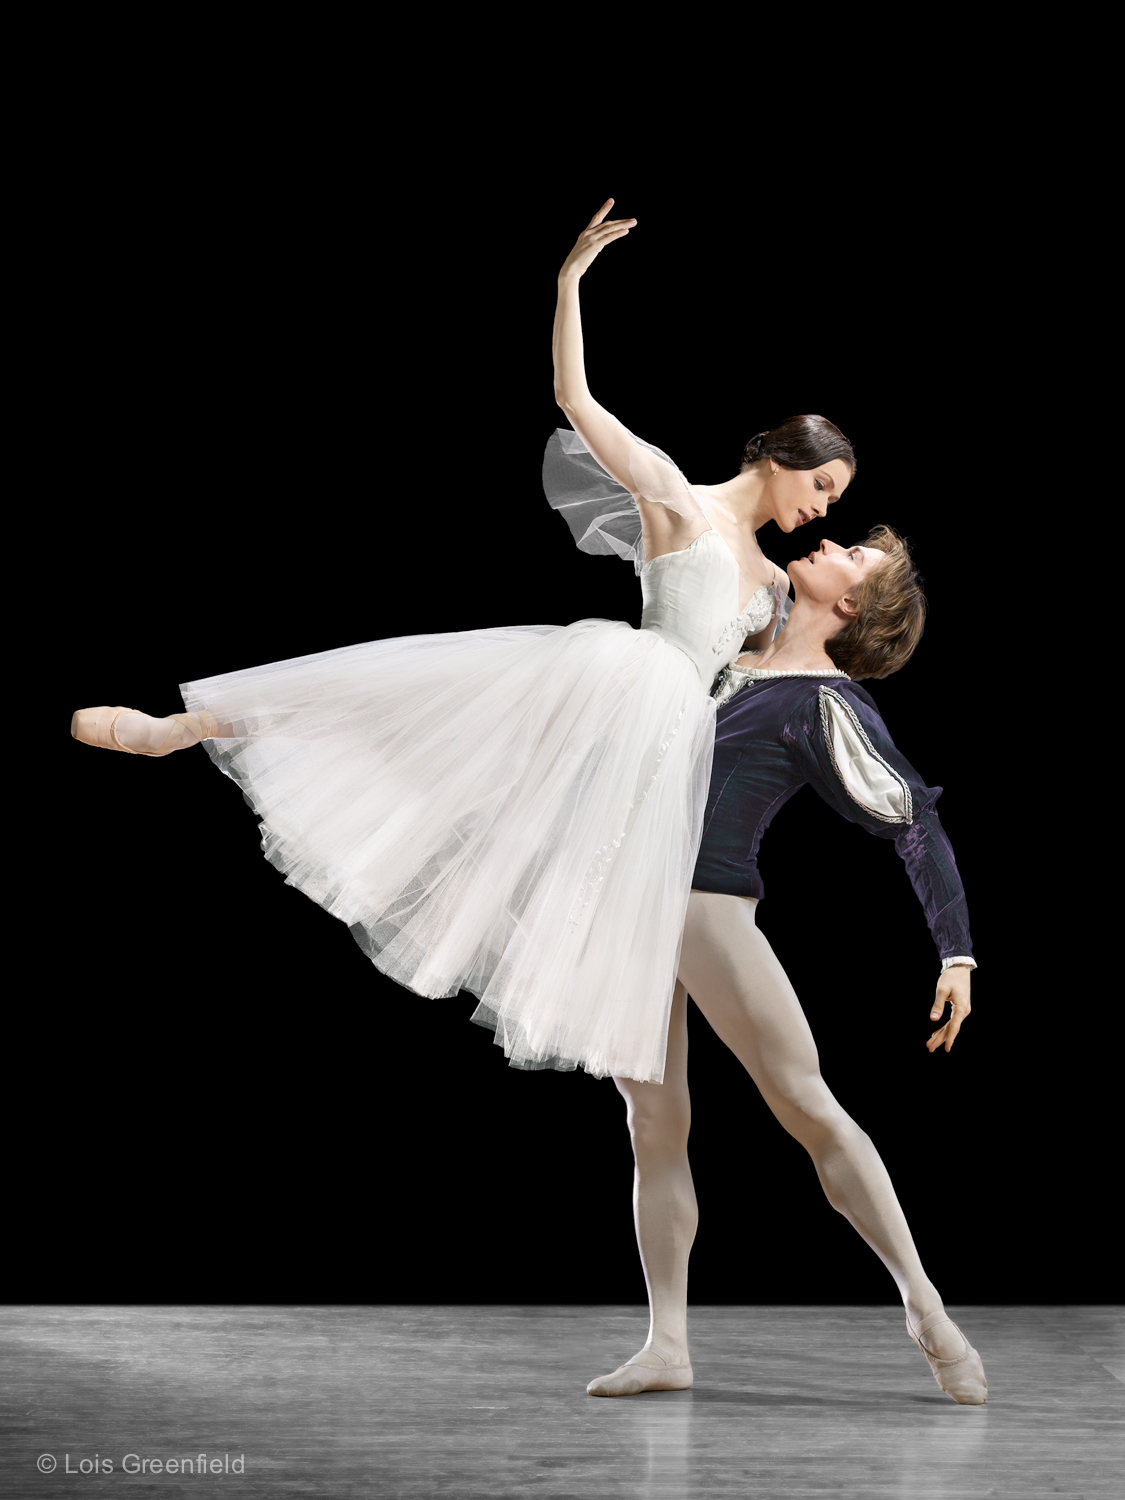 Irina Dvorovenko and Maxim Belotscrovoosky, "Giselle", AMERICAN BALLET THEATRE